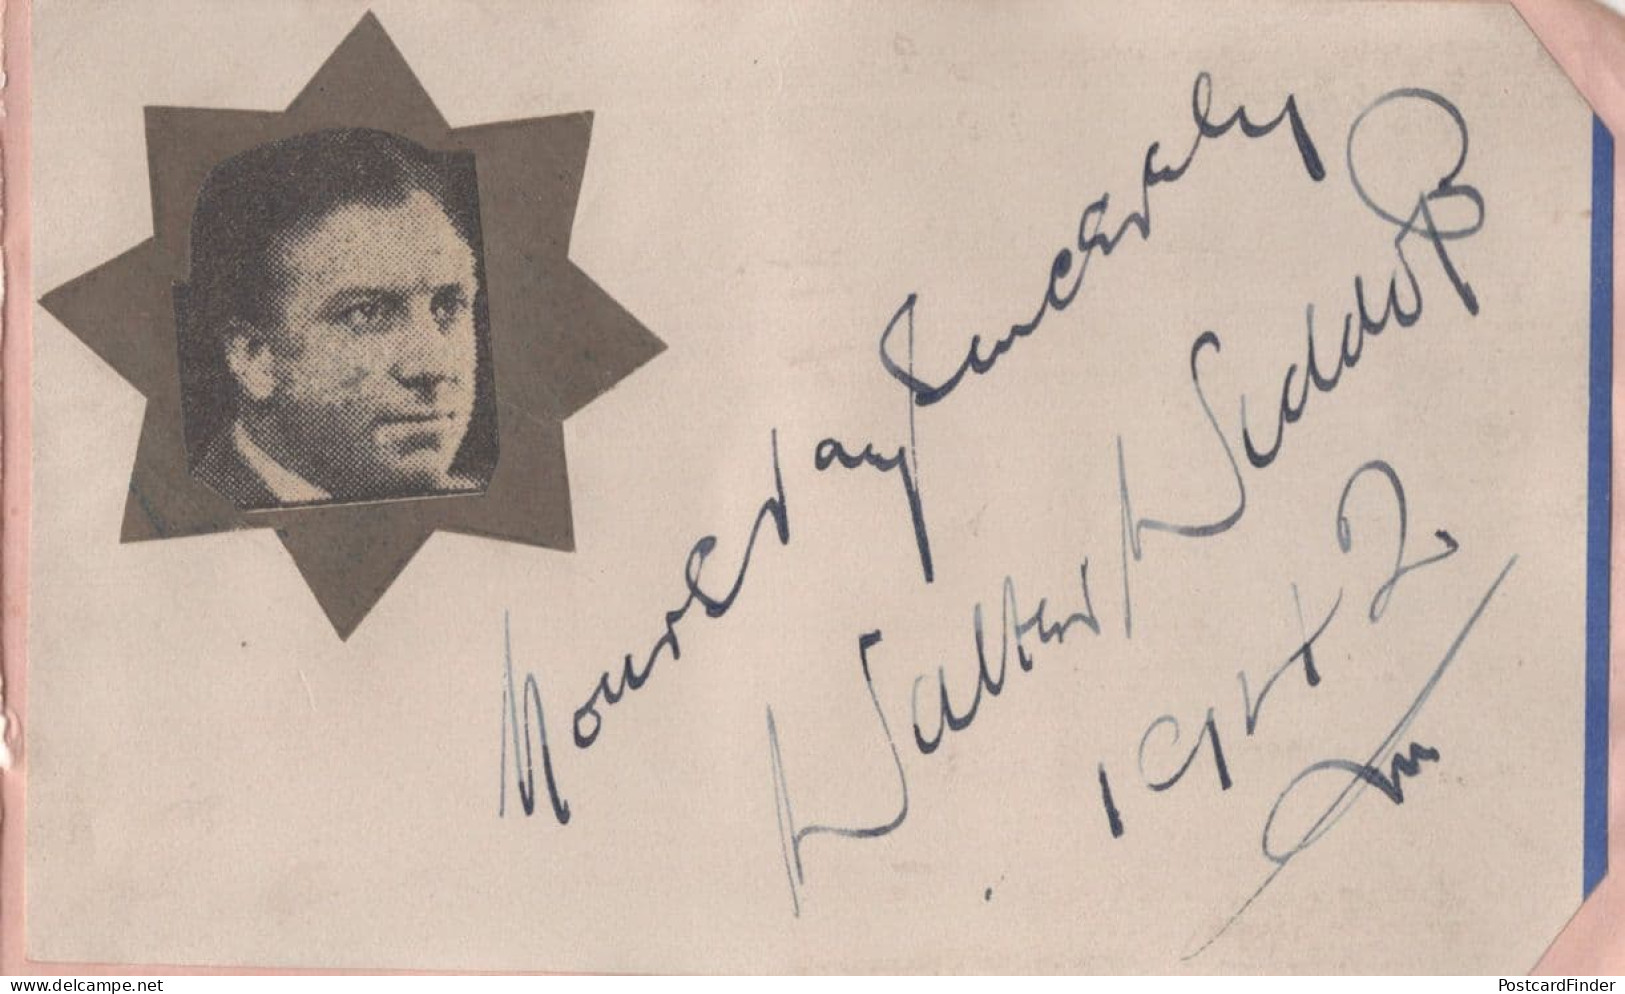 Walter Widdop BBC Radio Opera Tenor Old Hand Signed Autograph - Singers & Musicians